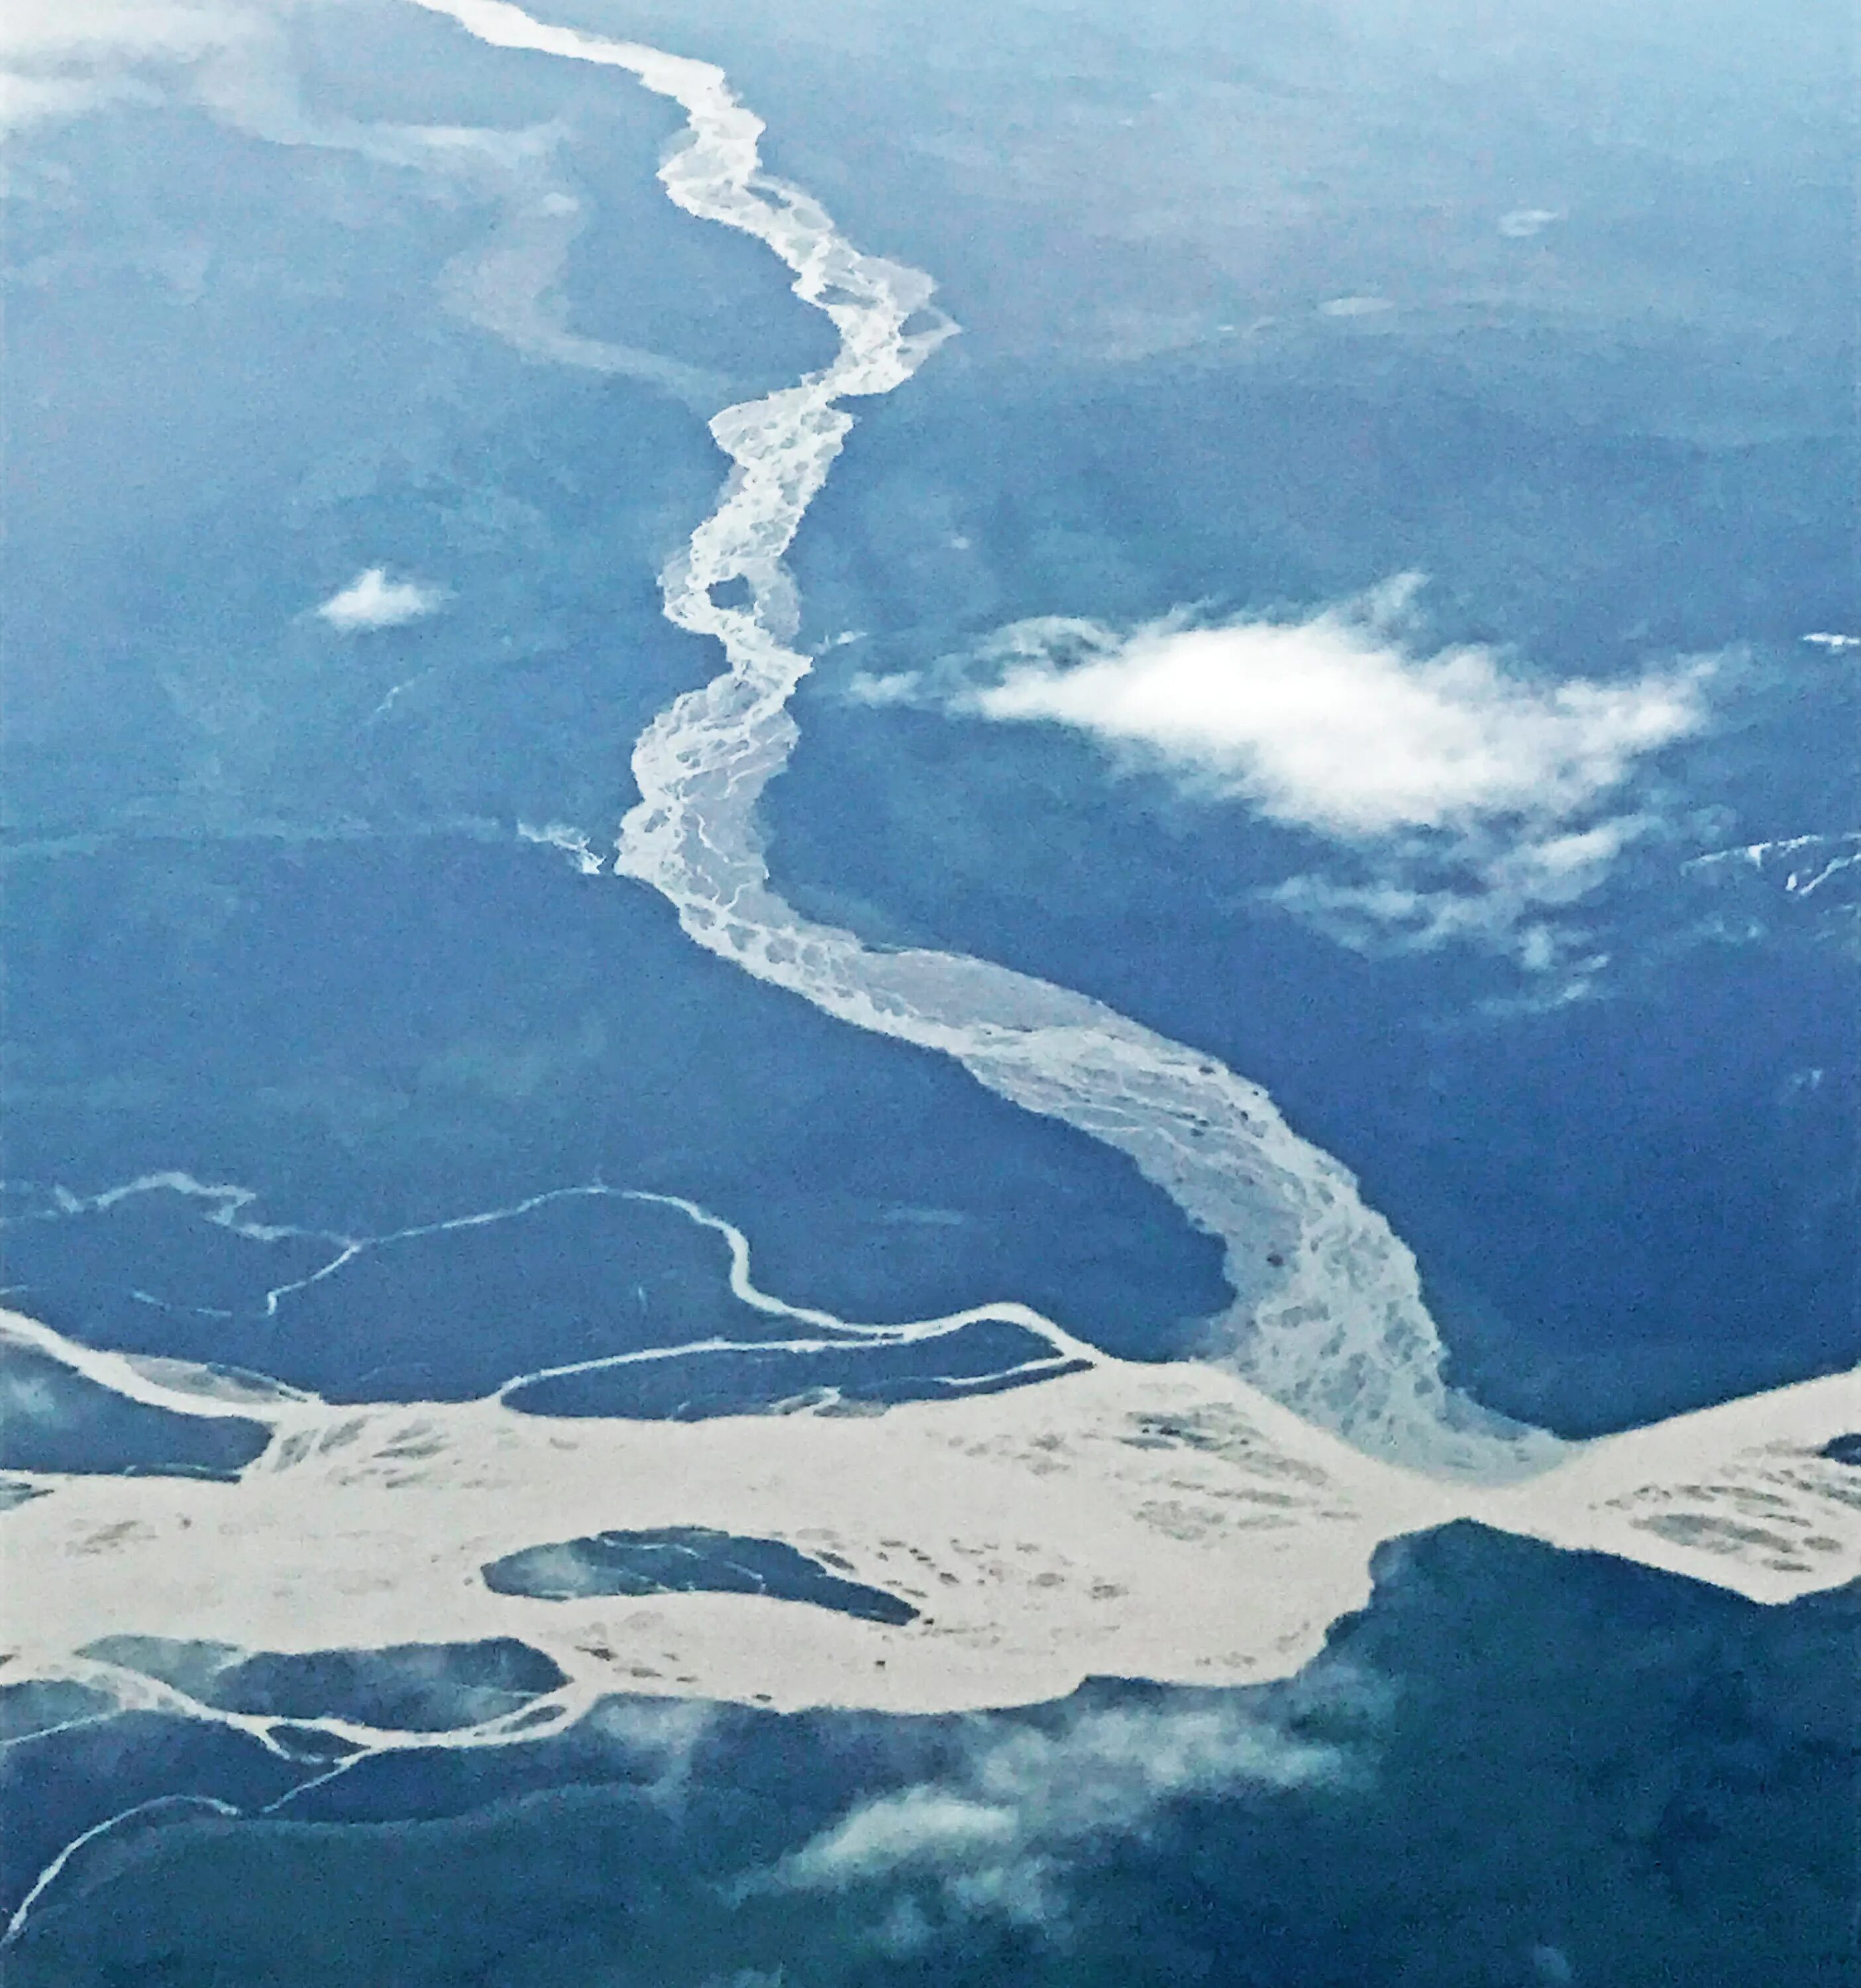 Аляска 4 буквы. Река Танана. Дельта Джанкшен. Танана Аляска. Delta Junction Alaska.